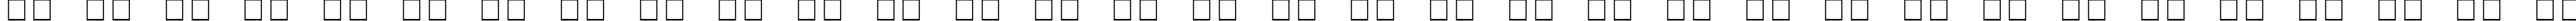 Пример написания русского алфавита шрифтом Lucida Bright Math Italic